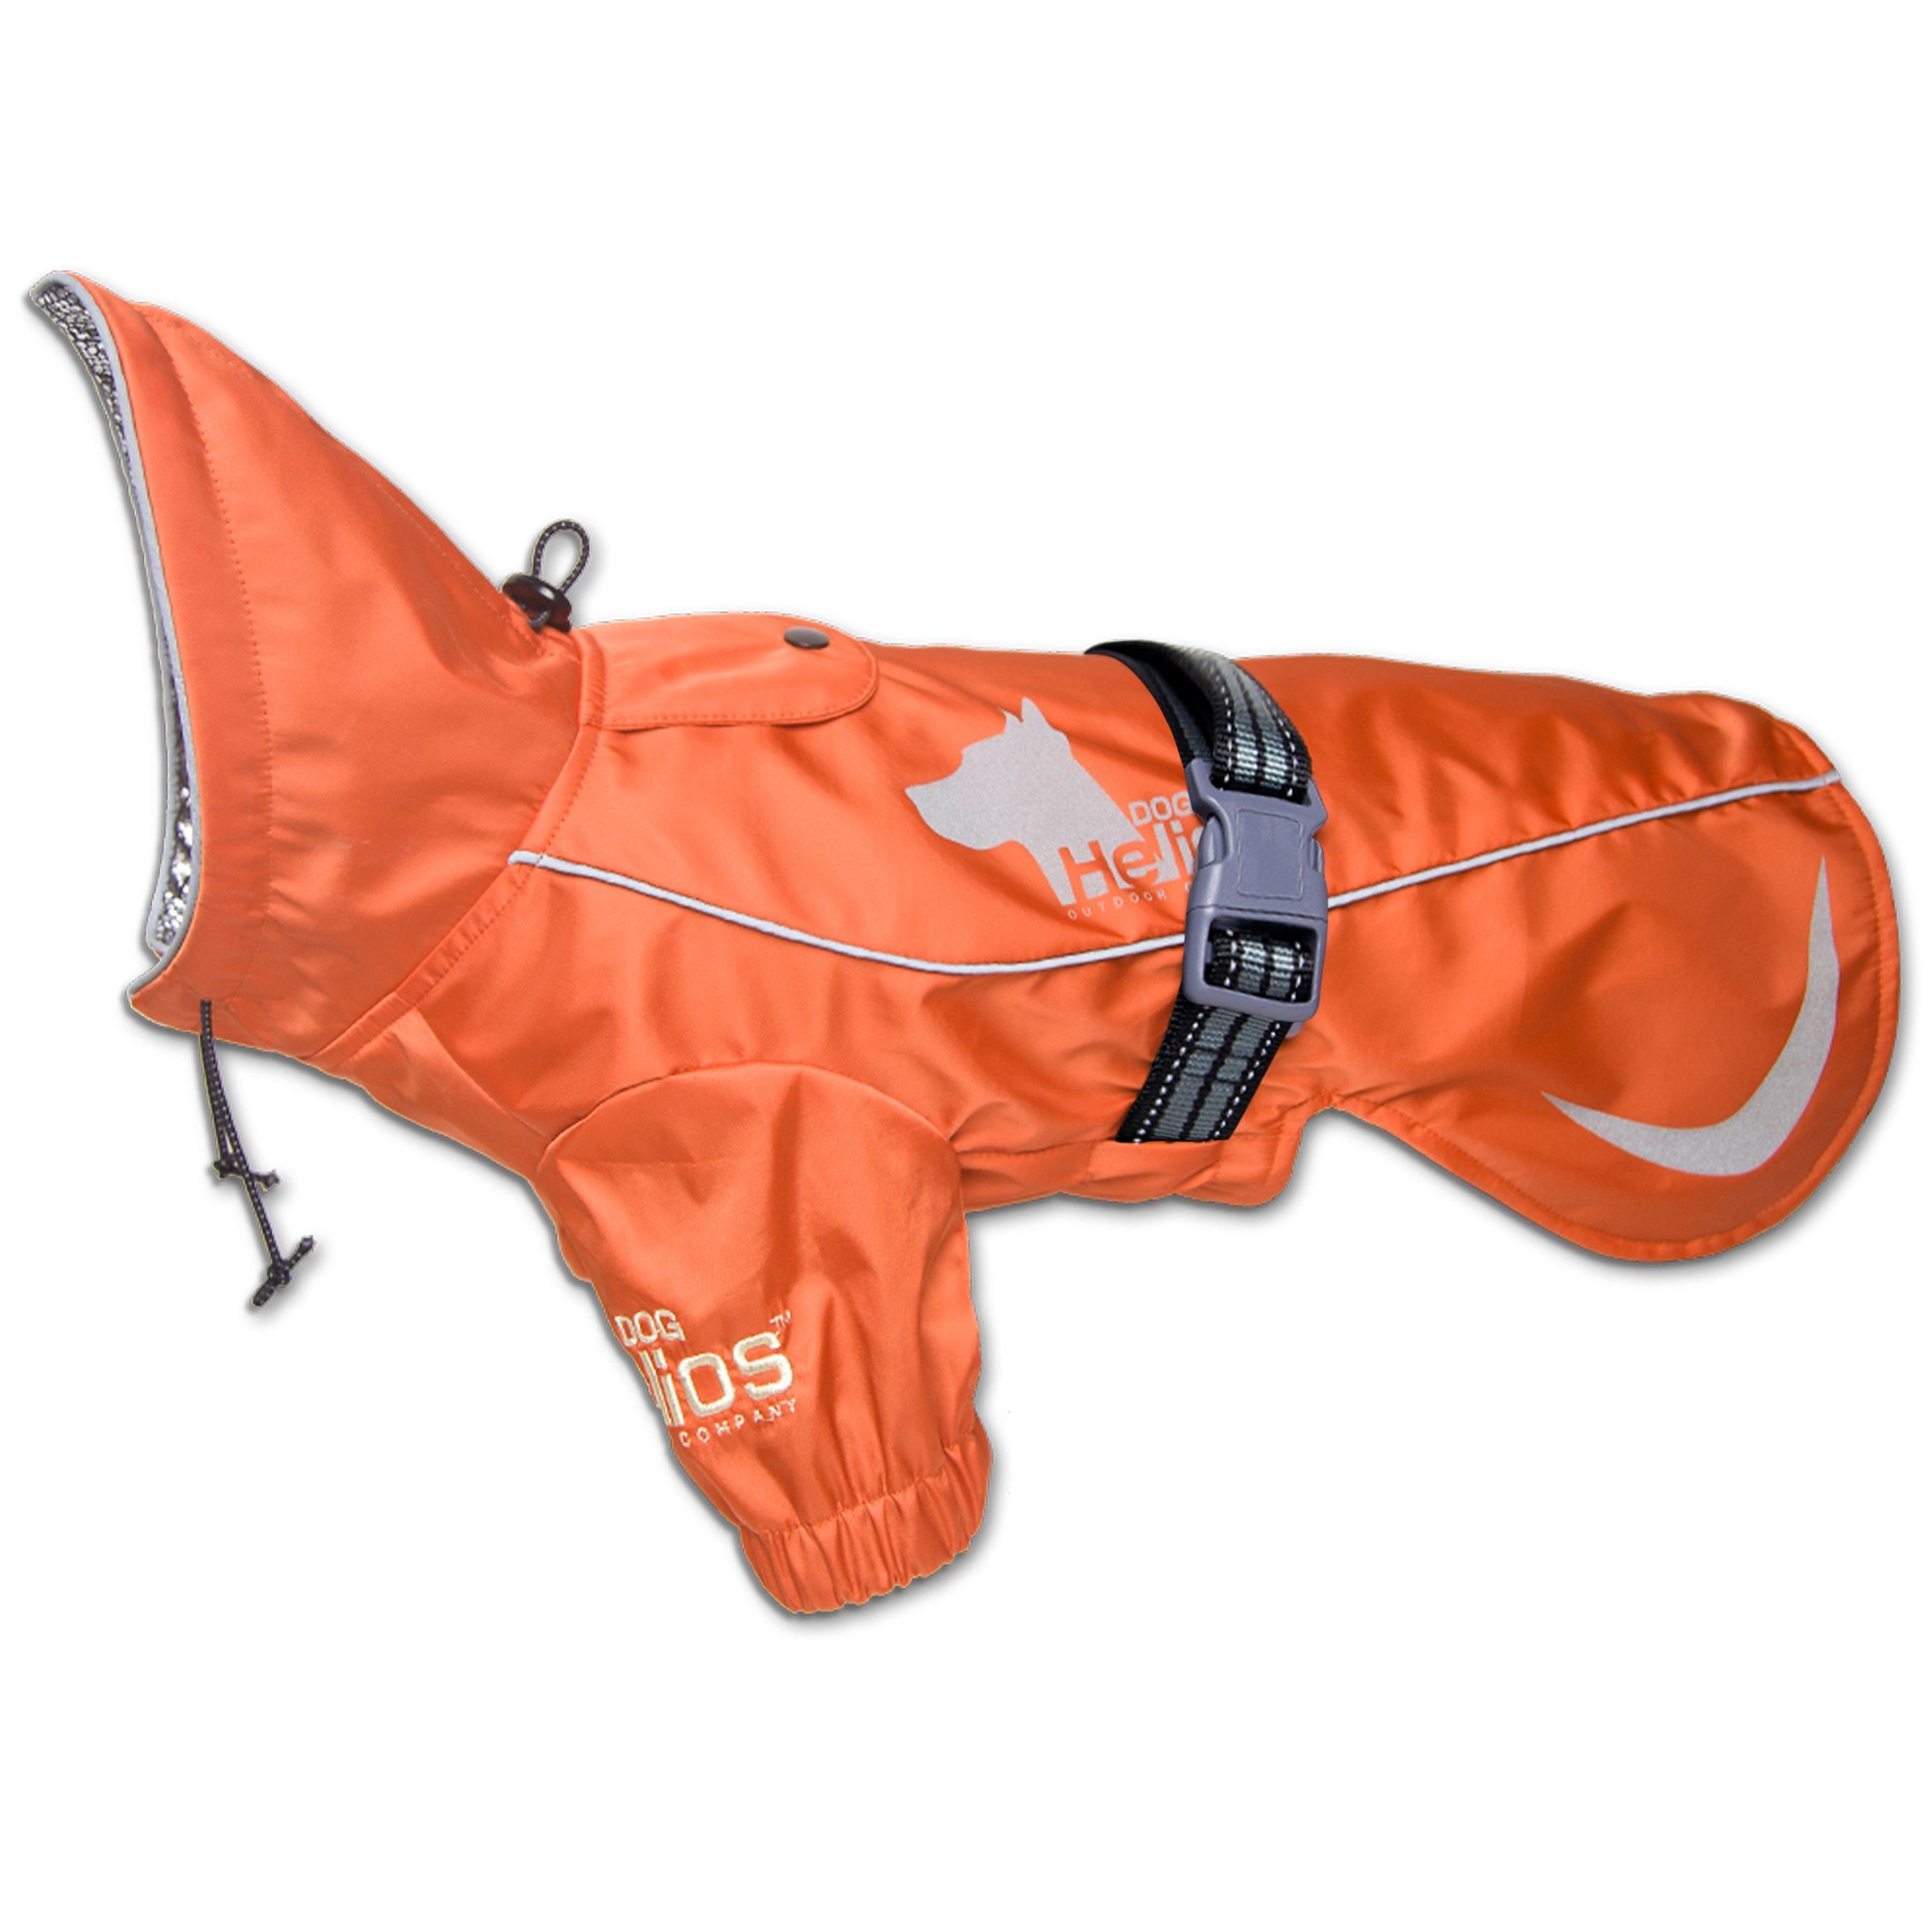 Dog Helios 'Ice-Breaker' Extendable Hooded Dog Coat w/ Heat Reflective Technology X-Small Orange